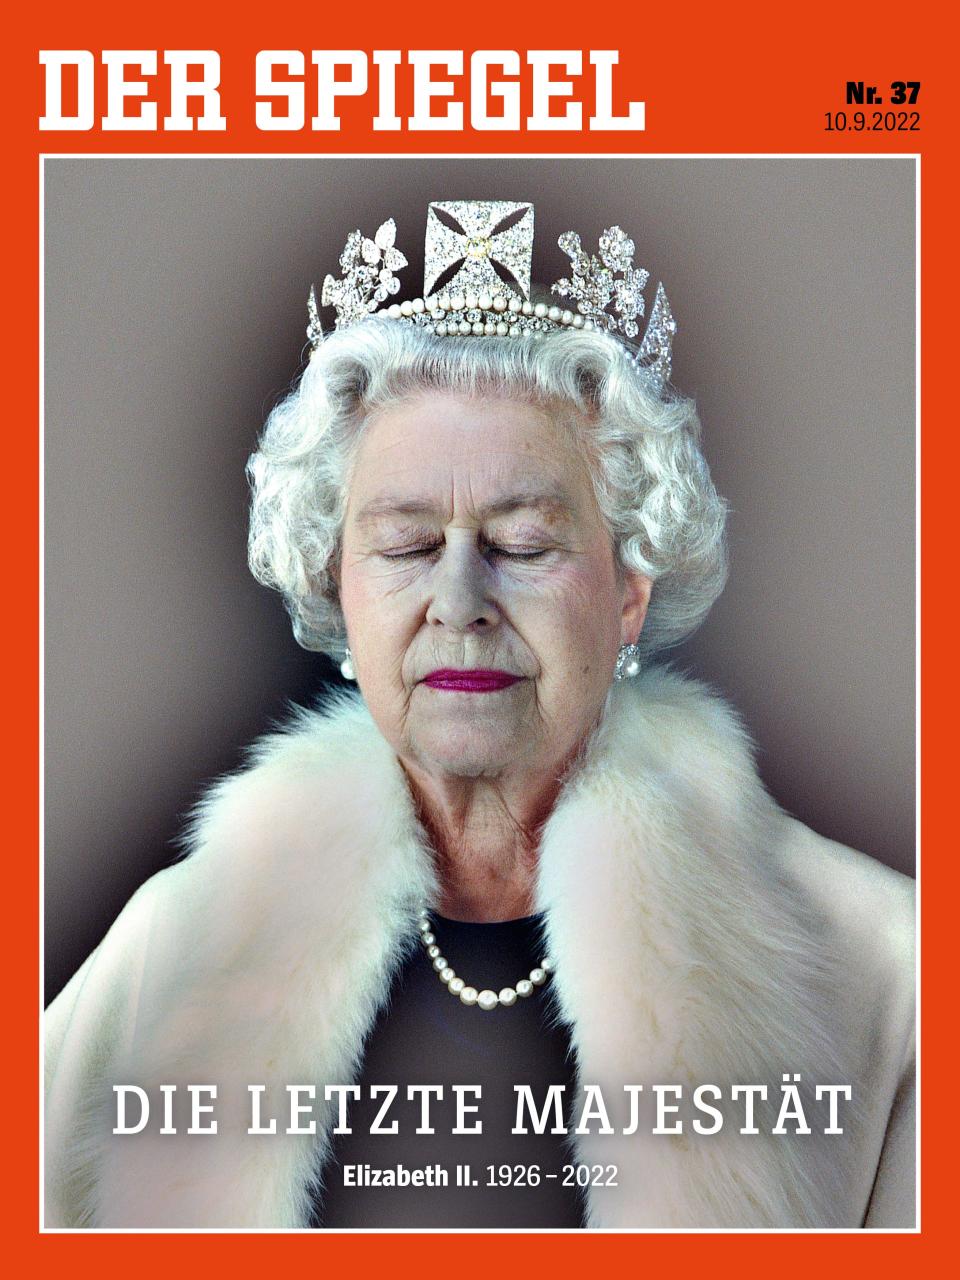 Der Spiegel's cover on September 9, 2022, marking the death of Queen Elizabeth II.